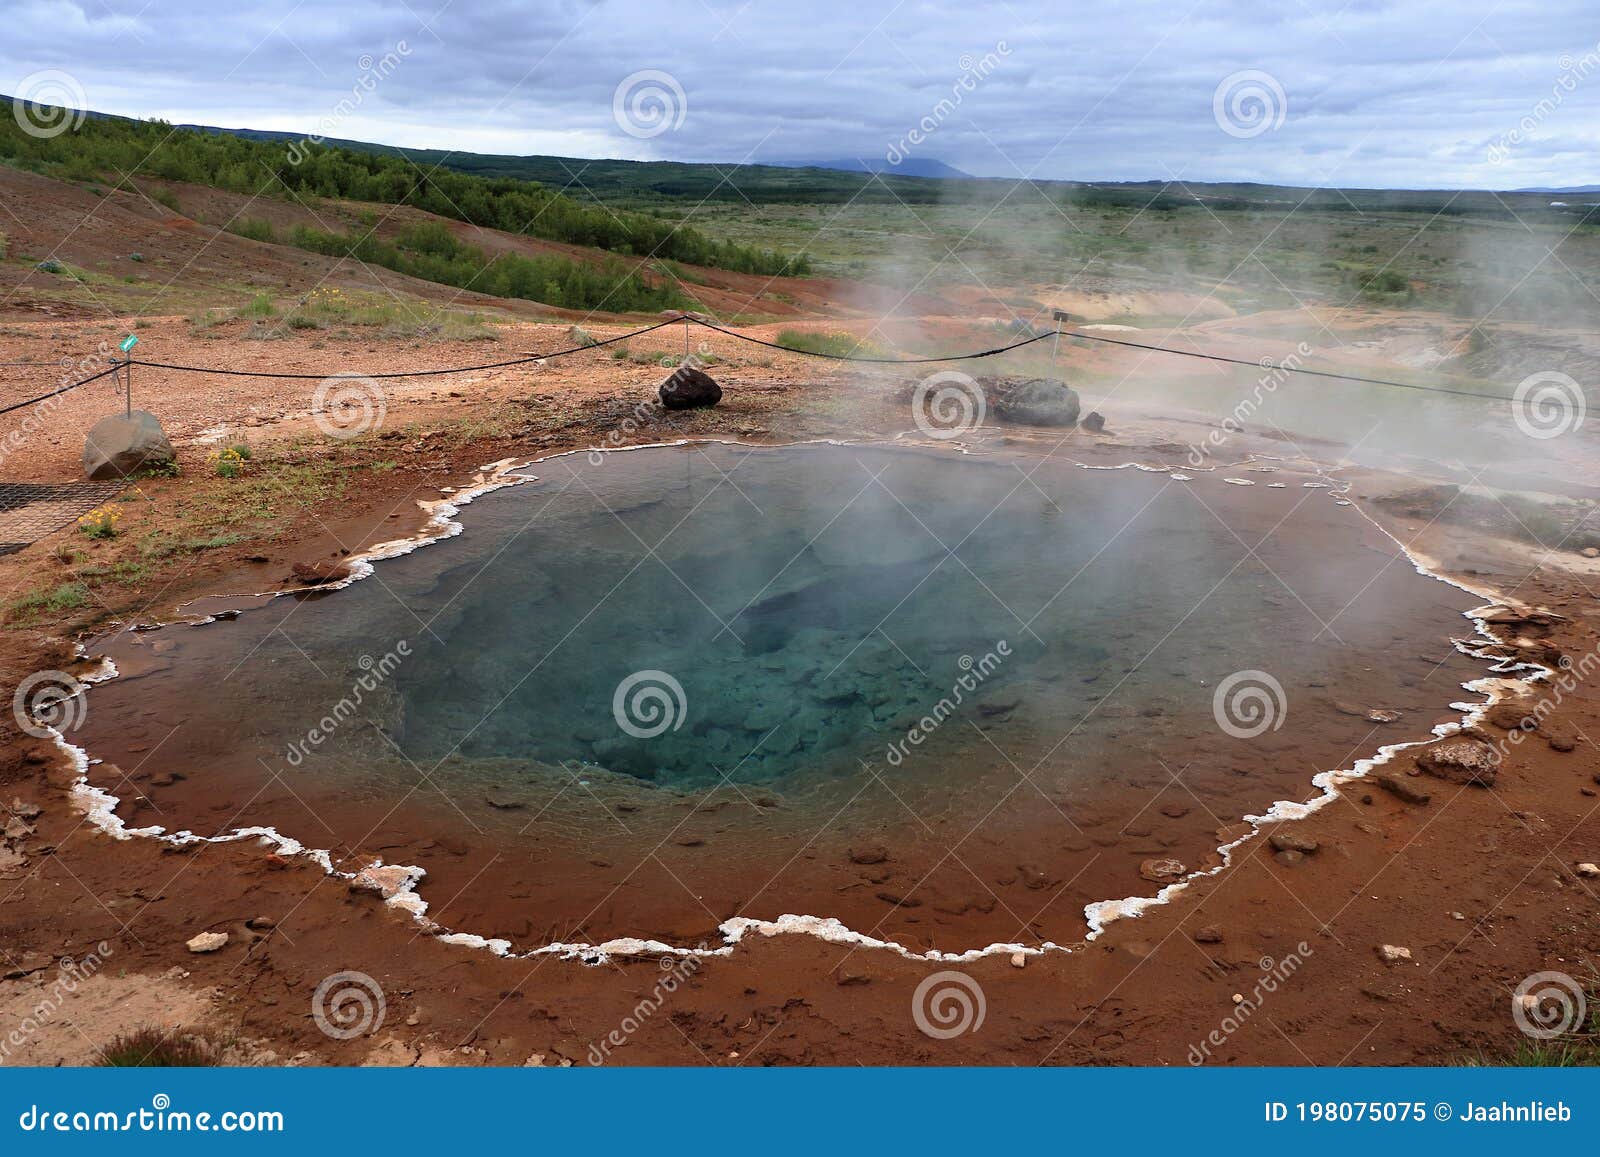 haukadalur geothermal area with konungshver hot spring, golden circle, western iceland